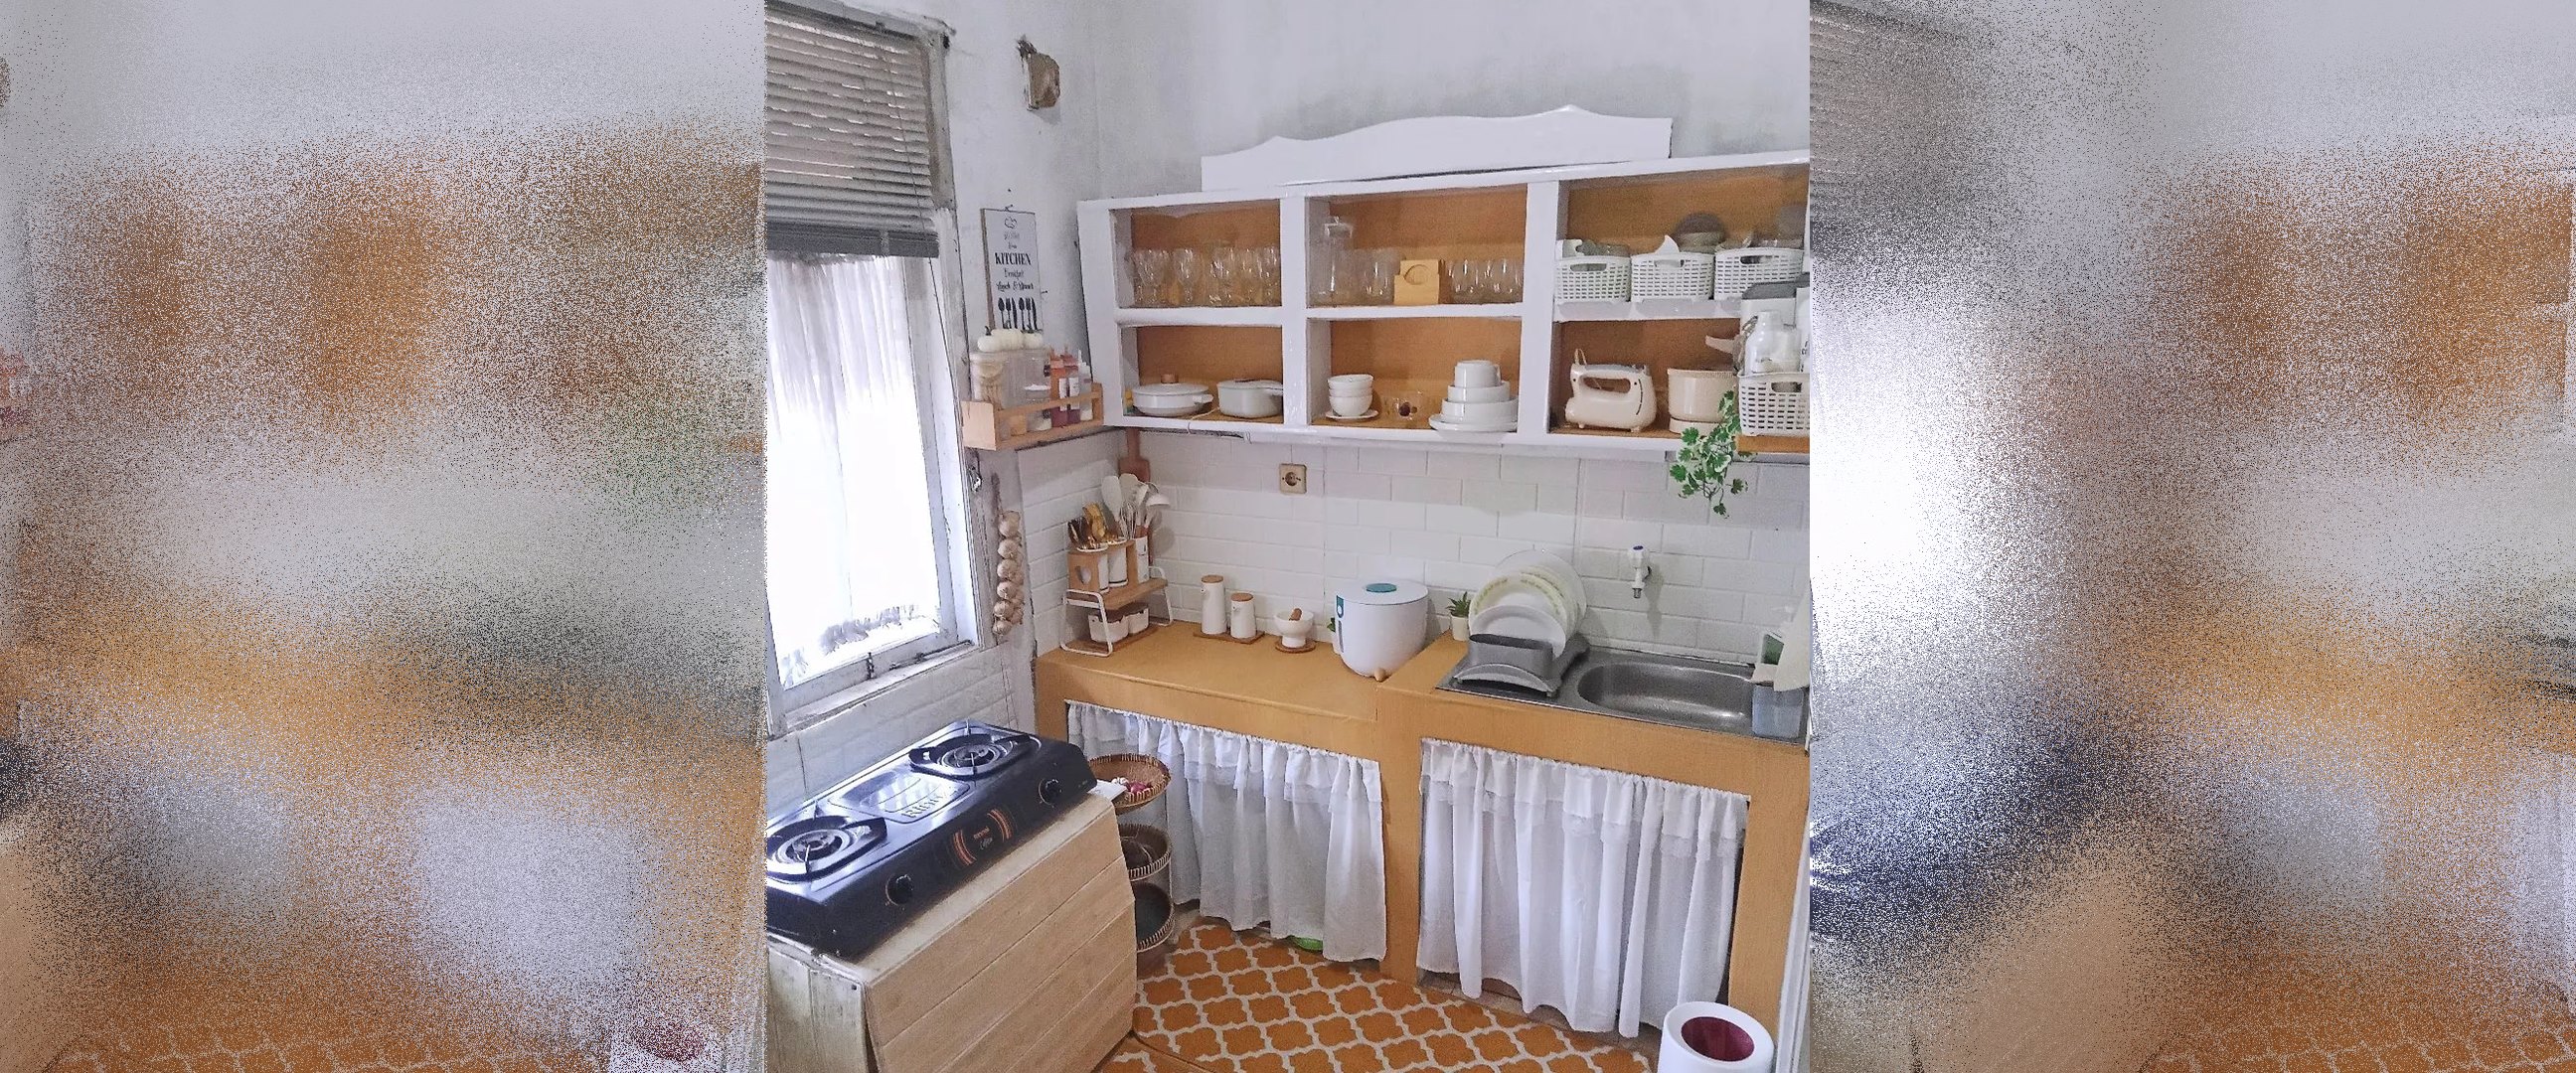 10 Potret dapur mungil tanpa kitchen set ini tampak estetik, cocok buat inspirasi dekor pakai stiker